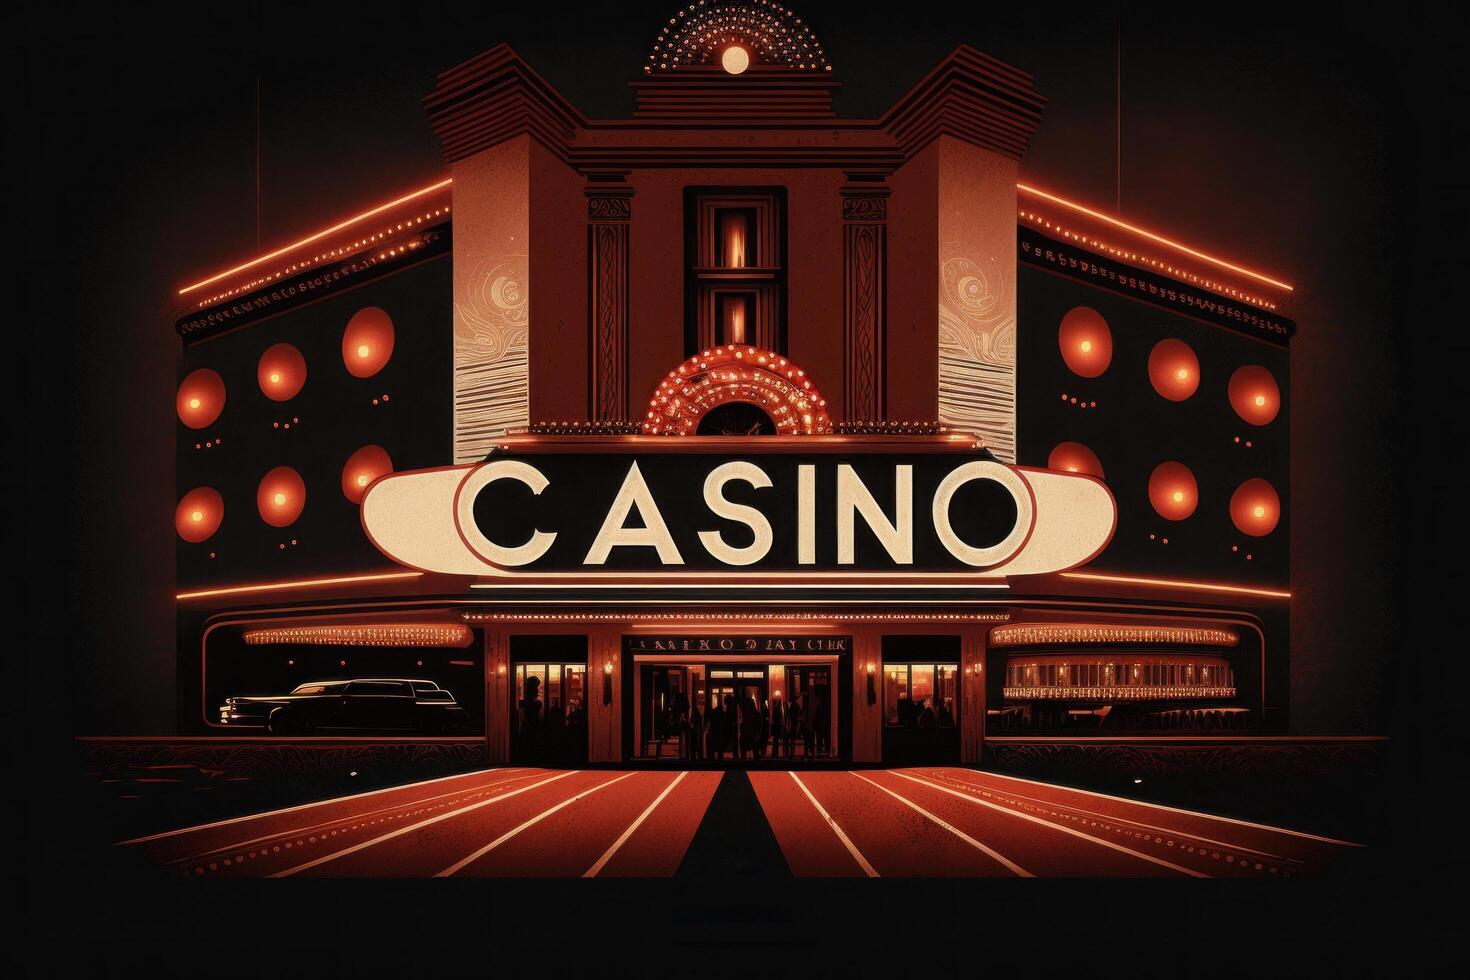 Casino roulette background. Illustration photo